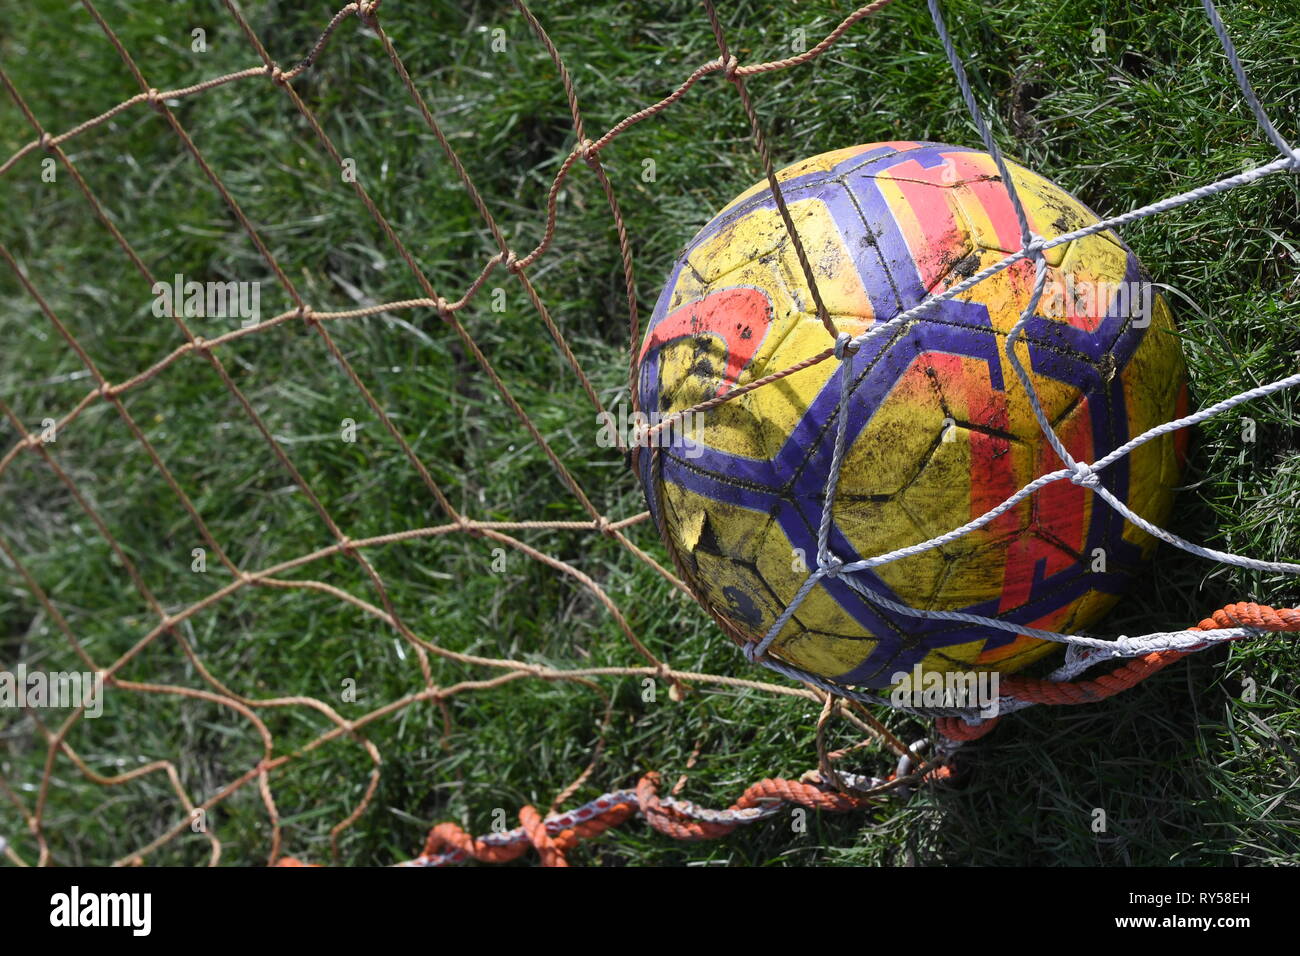 Football in goal nets Stock Photo